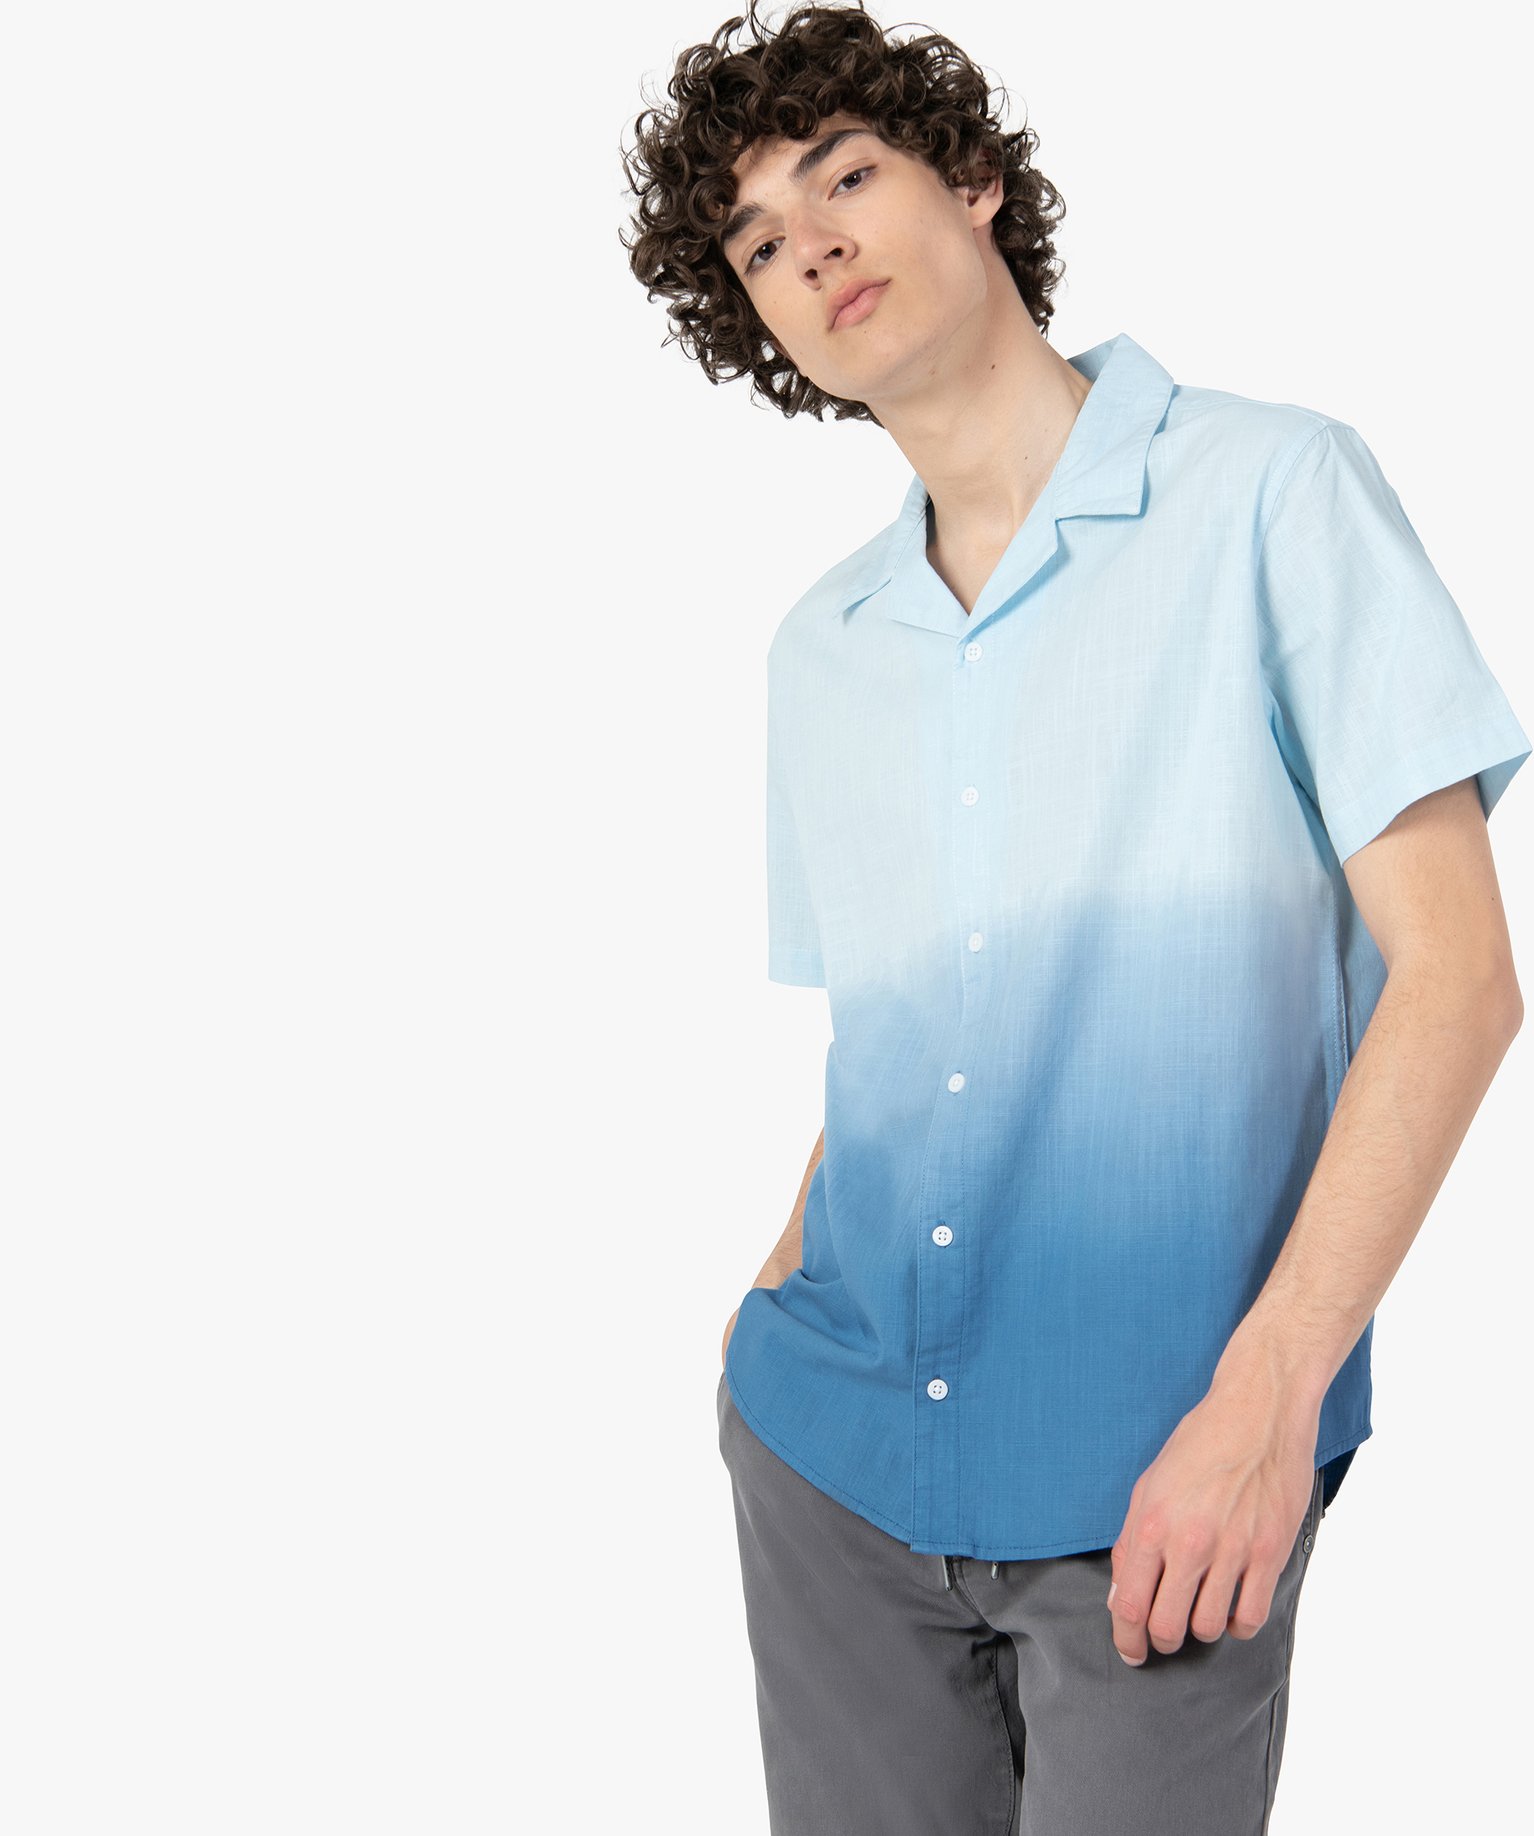 chemise homme a manches courtes effet tie and dye bleu chemise manches courtes